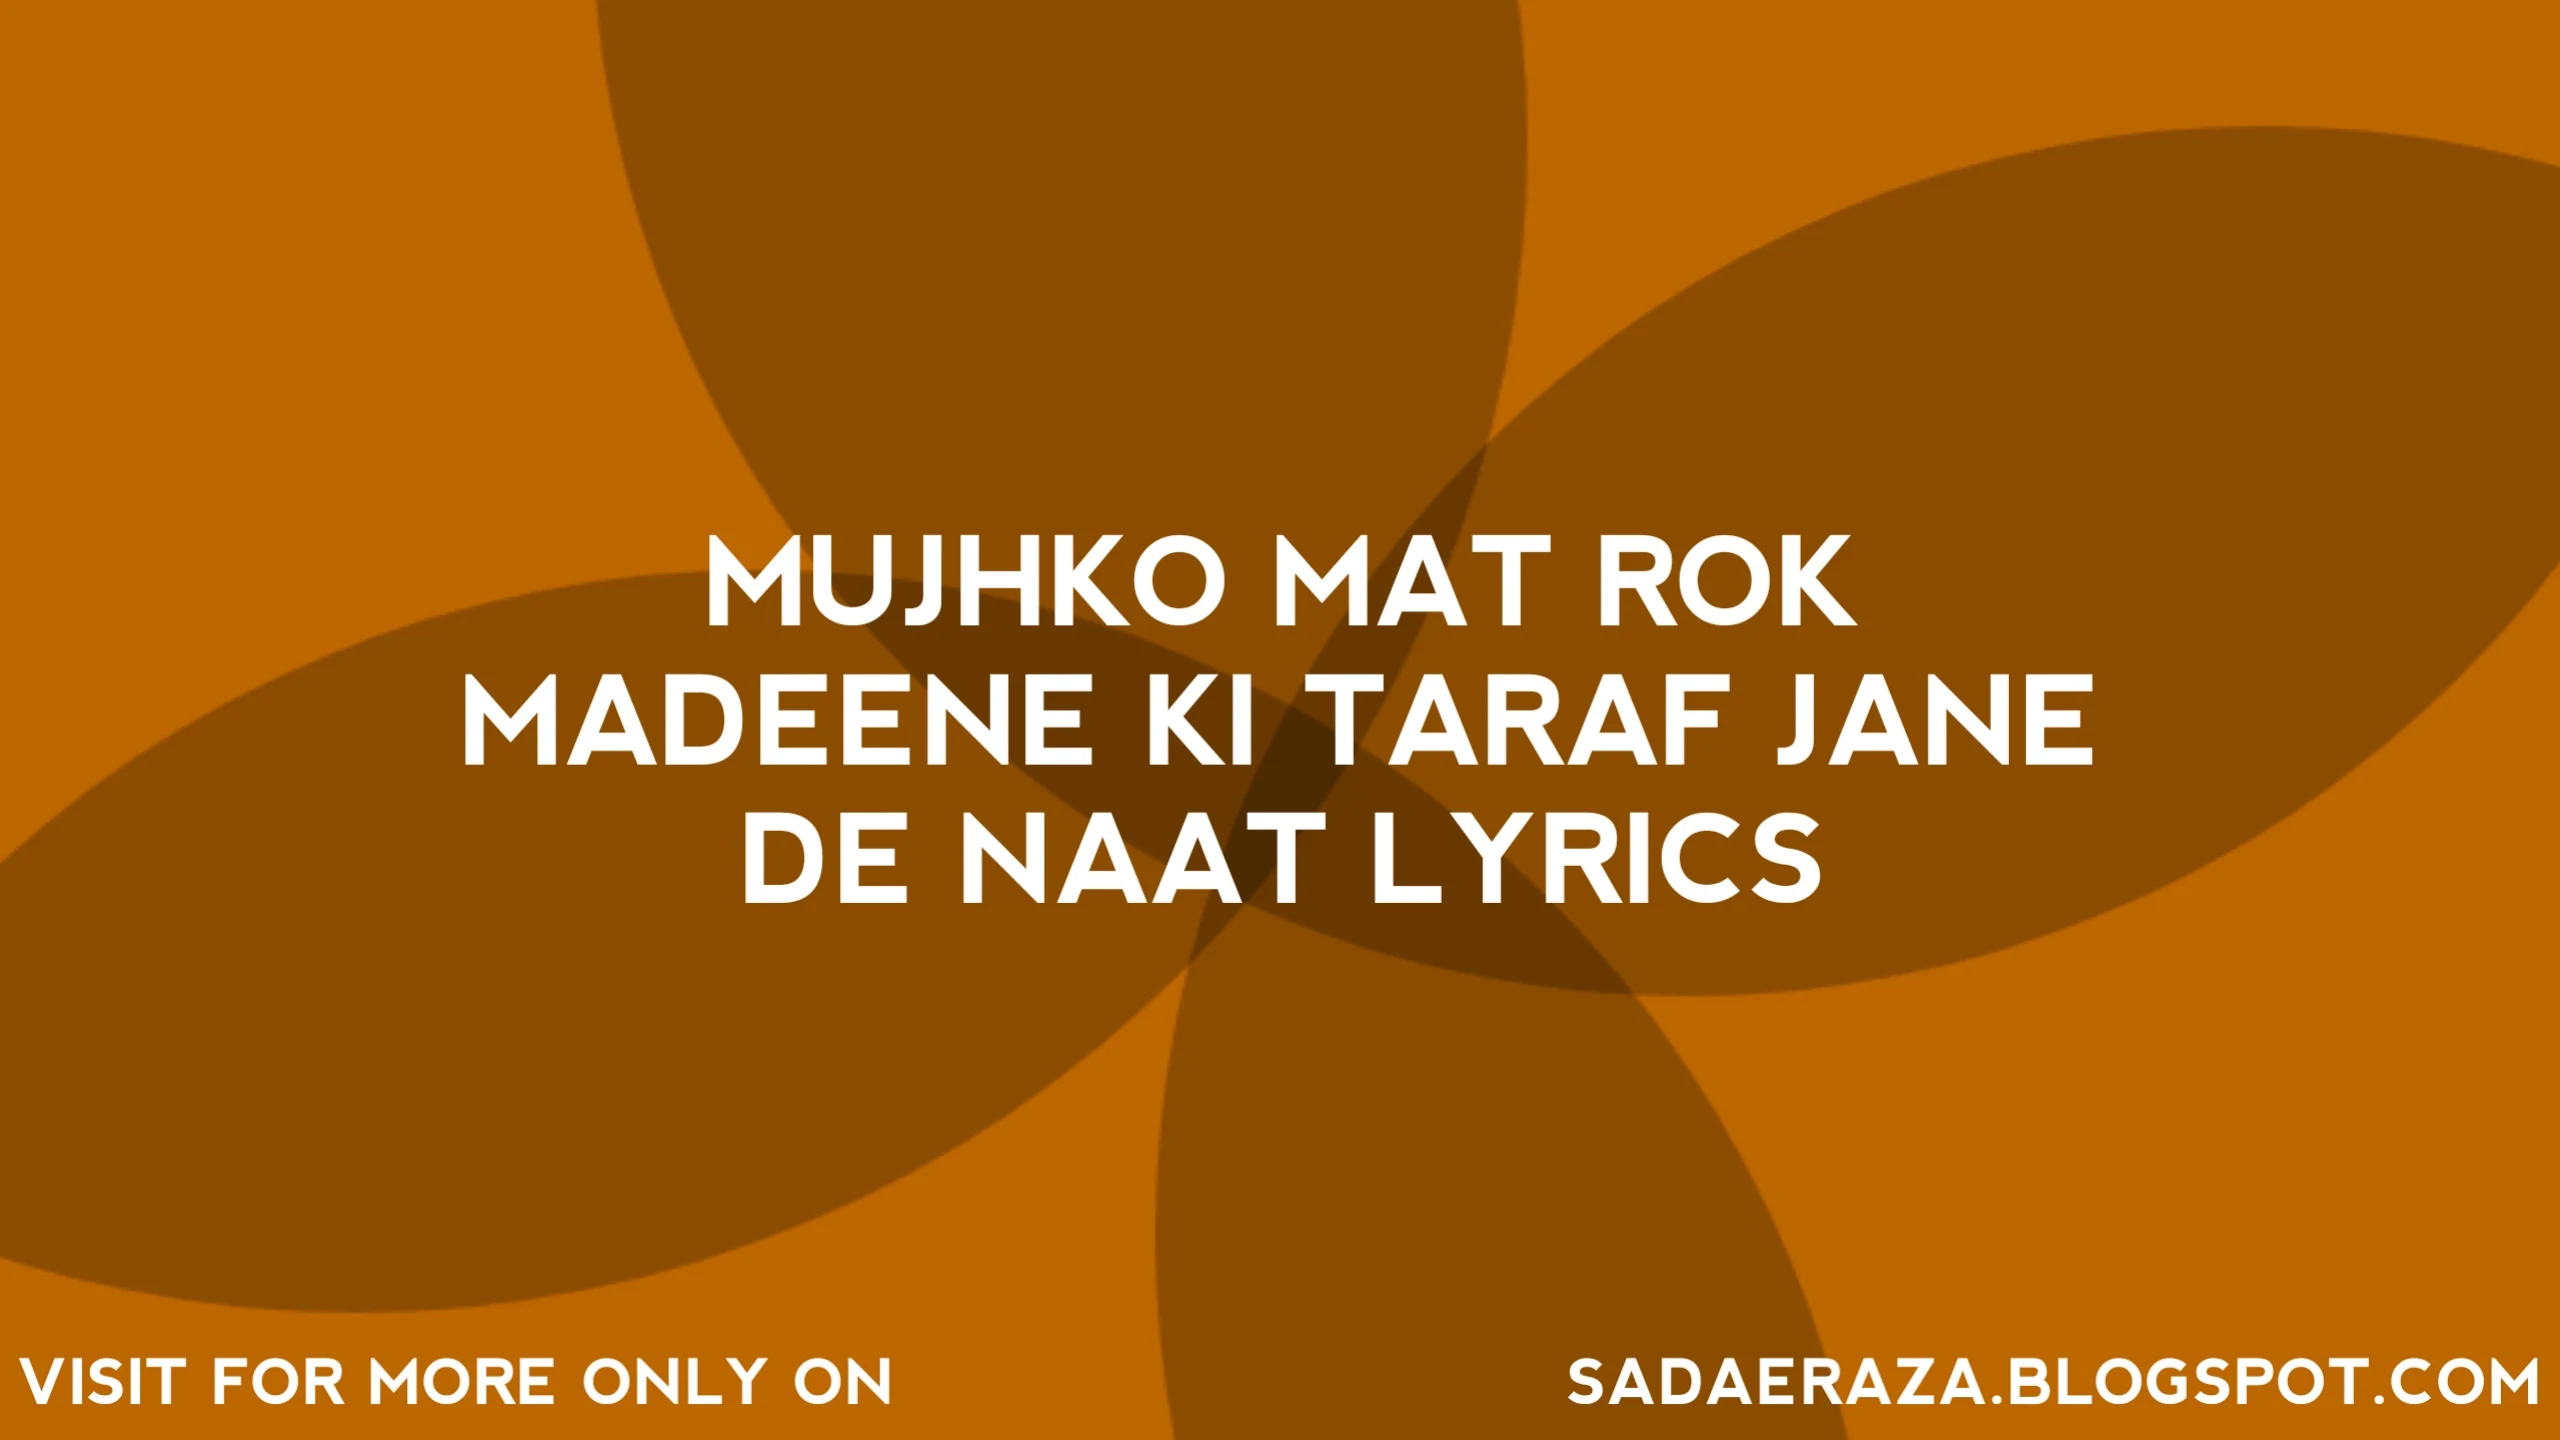 Mujhko Mat Rok Madeene Ki Taraf Jane De Naat Lyrics in Hindi, Mujhko Mat Rok Madeene Ki Taraf Jane De Naat Lyrics in Hindi